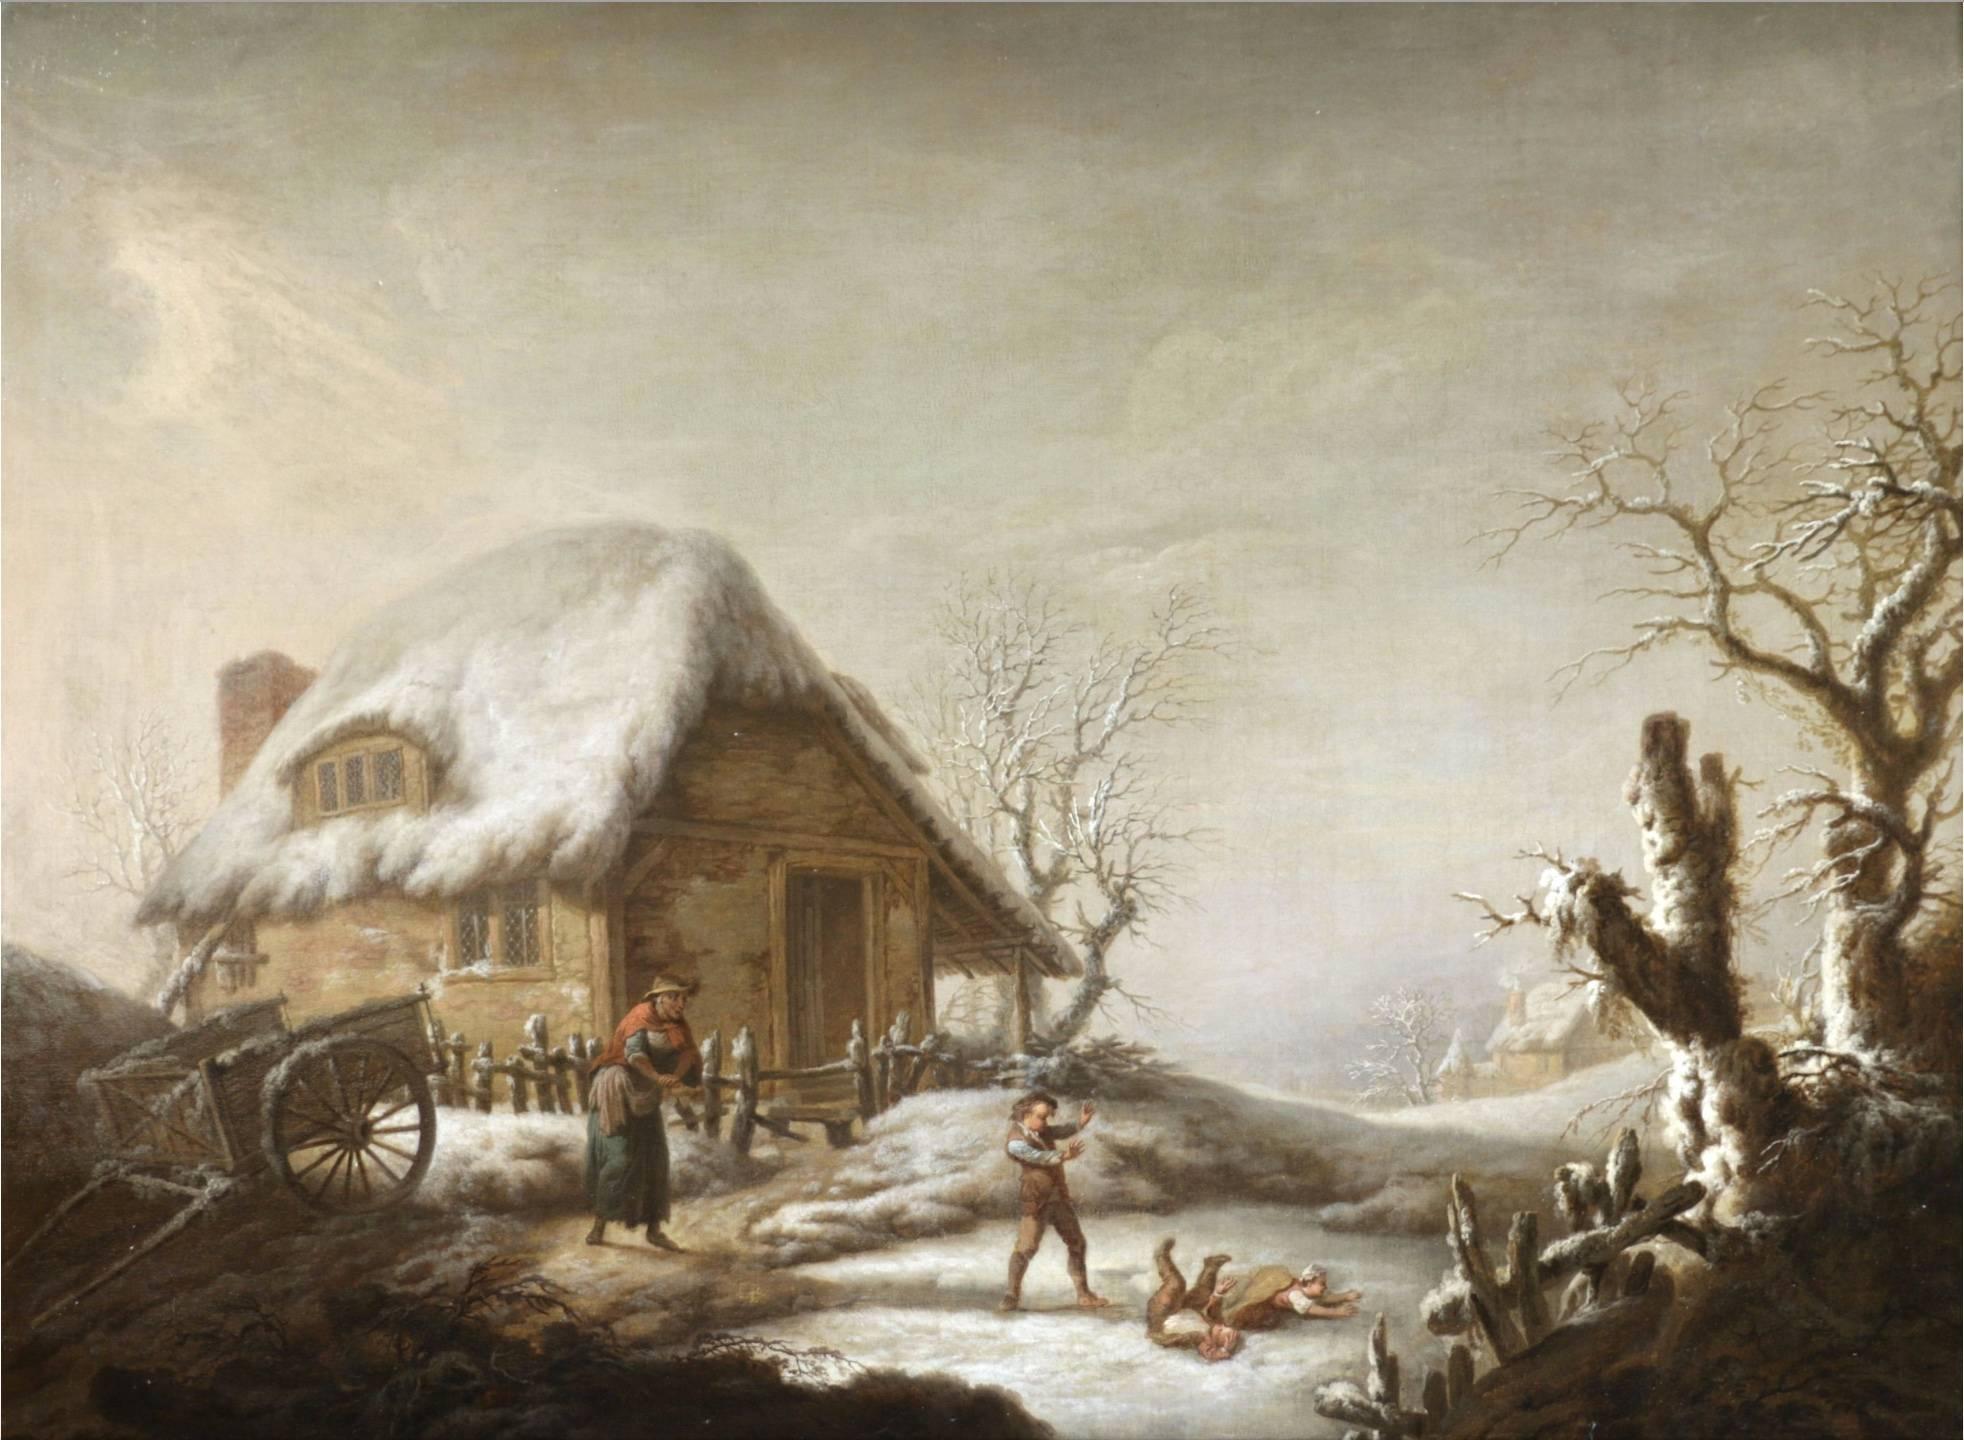 18th century winter